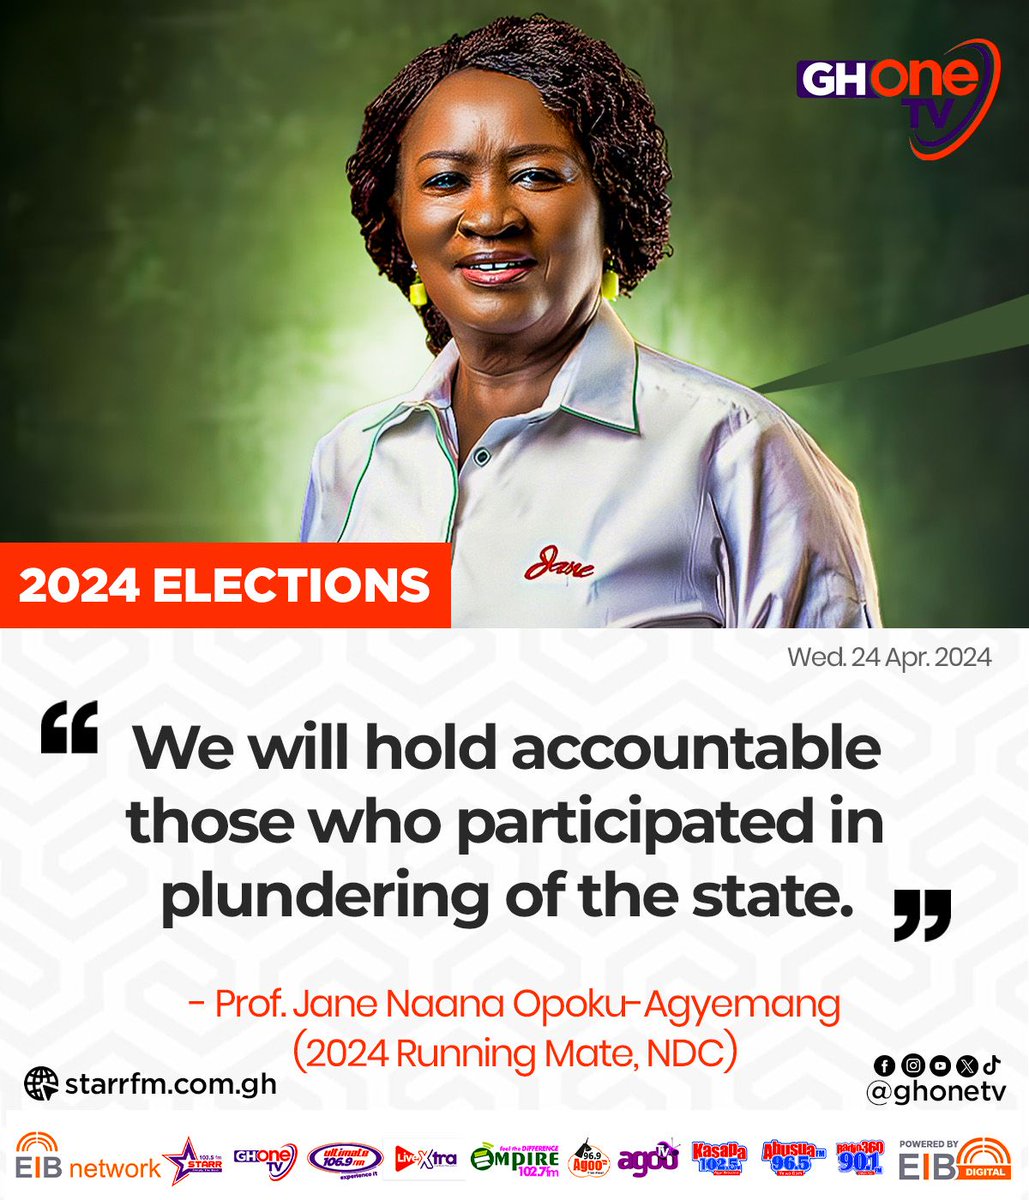 NDC Outdoors Prof. Jane Naana Opoku-Agyemang...

#GHOneNews #GHOneTV
#Election2024 #ElectionHub
#NDC #JohnAndJane2024